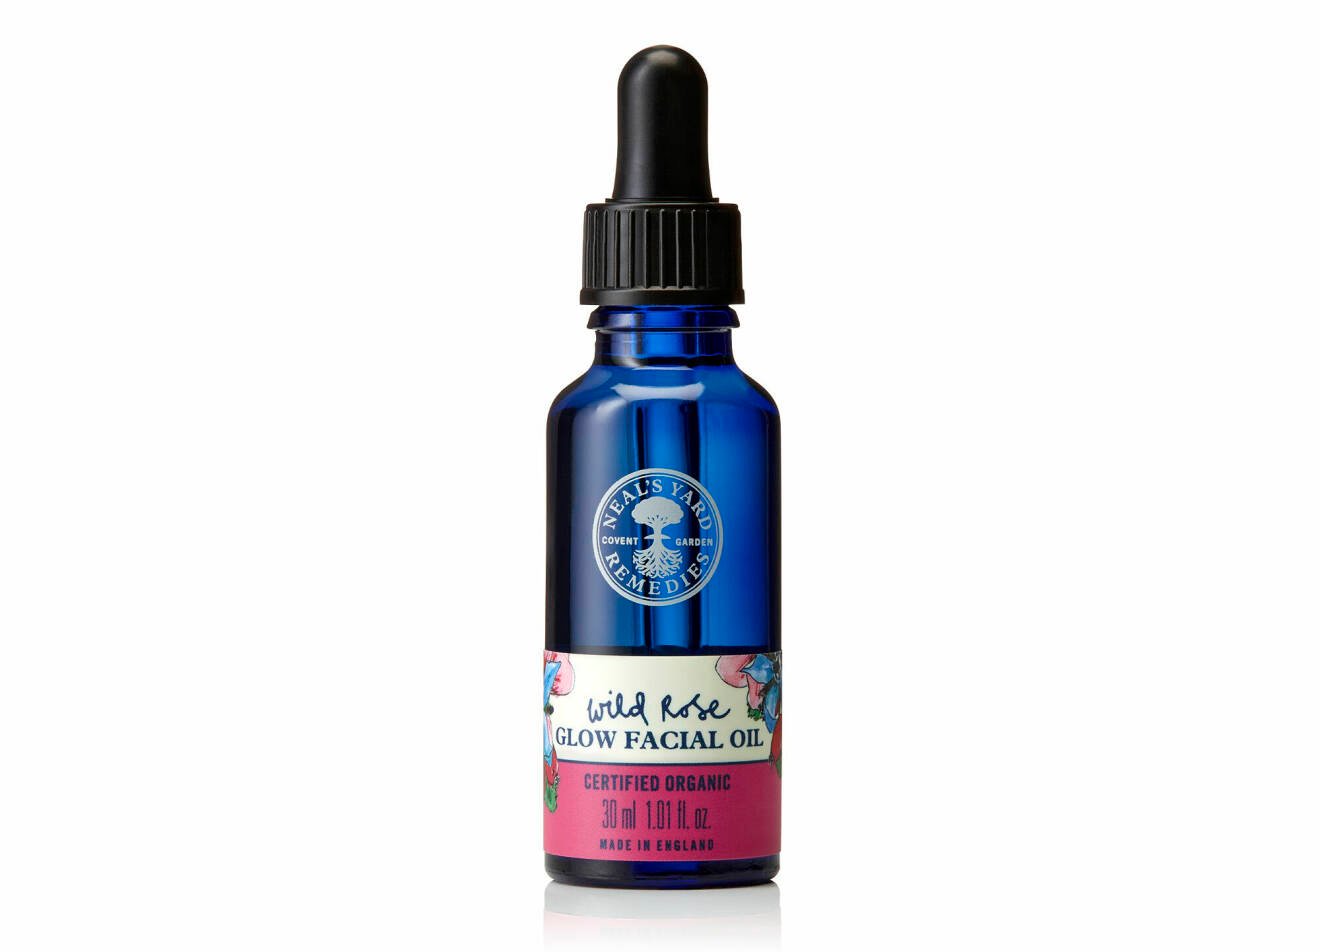 Wild rose glow facial oil från Neal's Yard Remedies